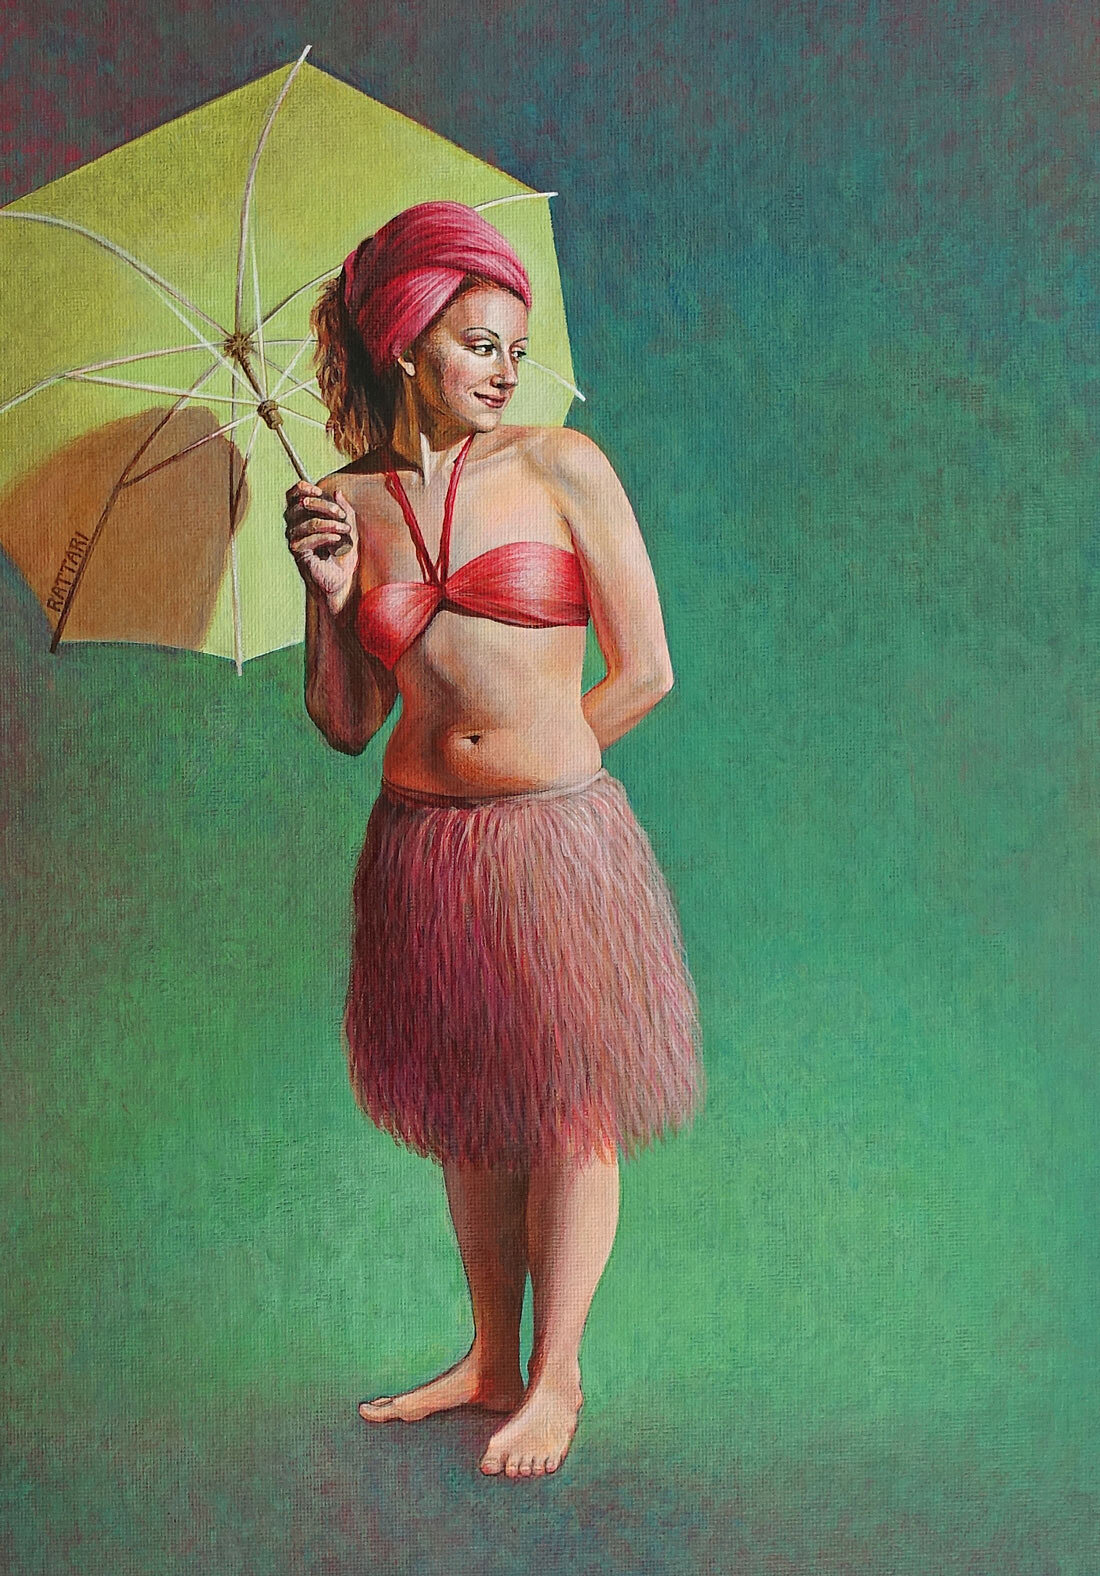 Umbrella, acrylics on canvas board, 10x16in